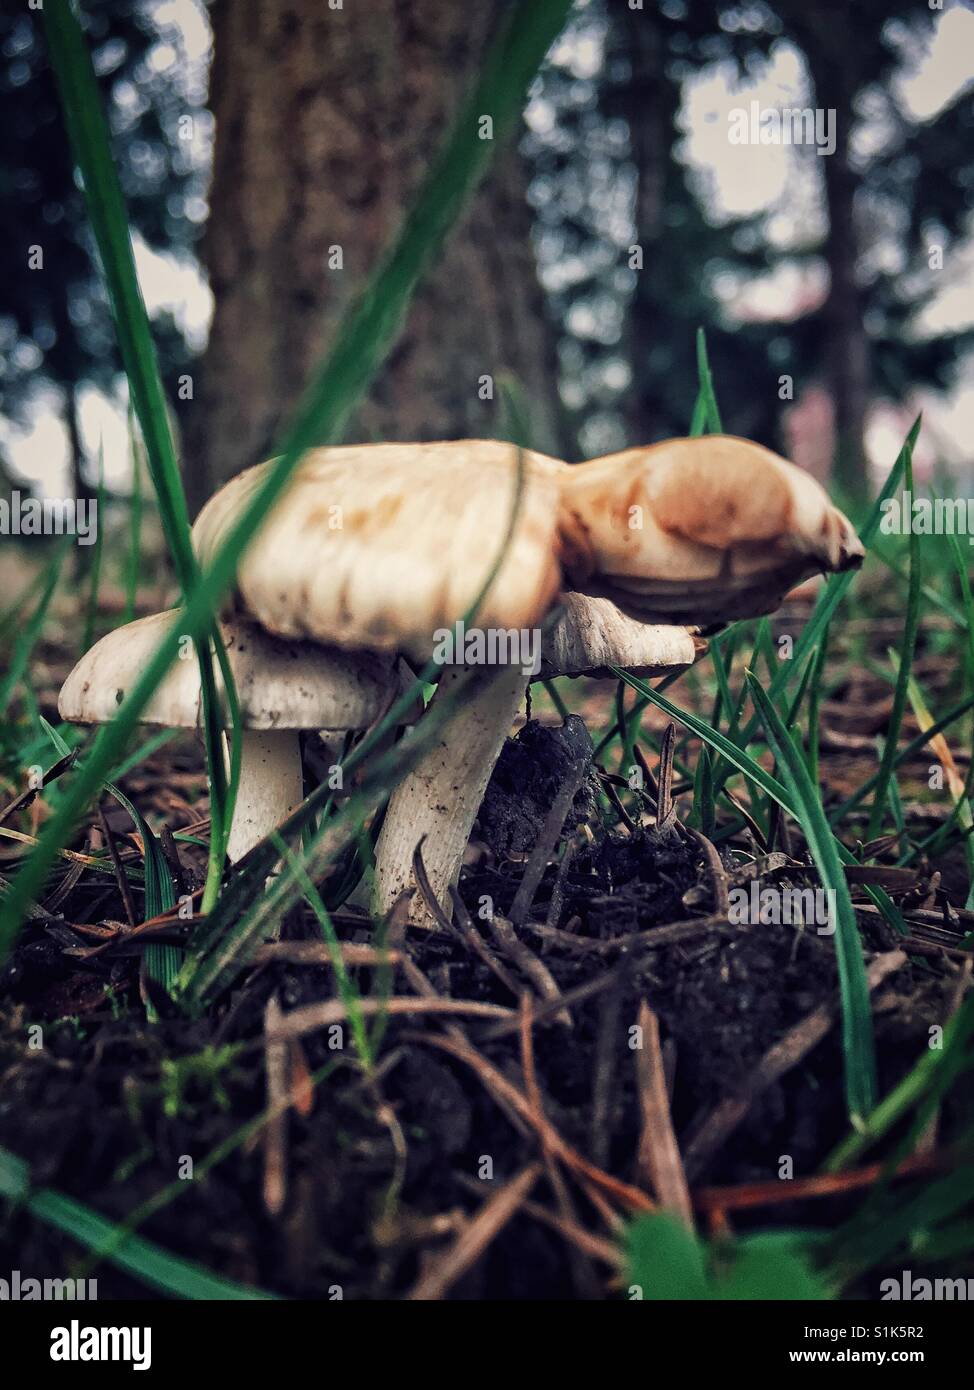 Wild mushrooms growing under the tree Stock Photo